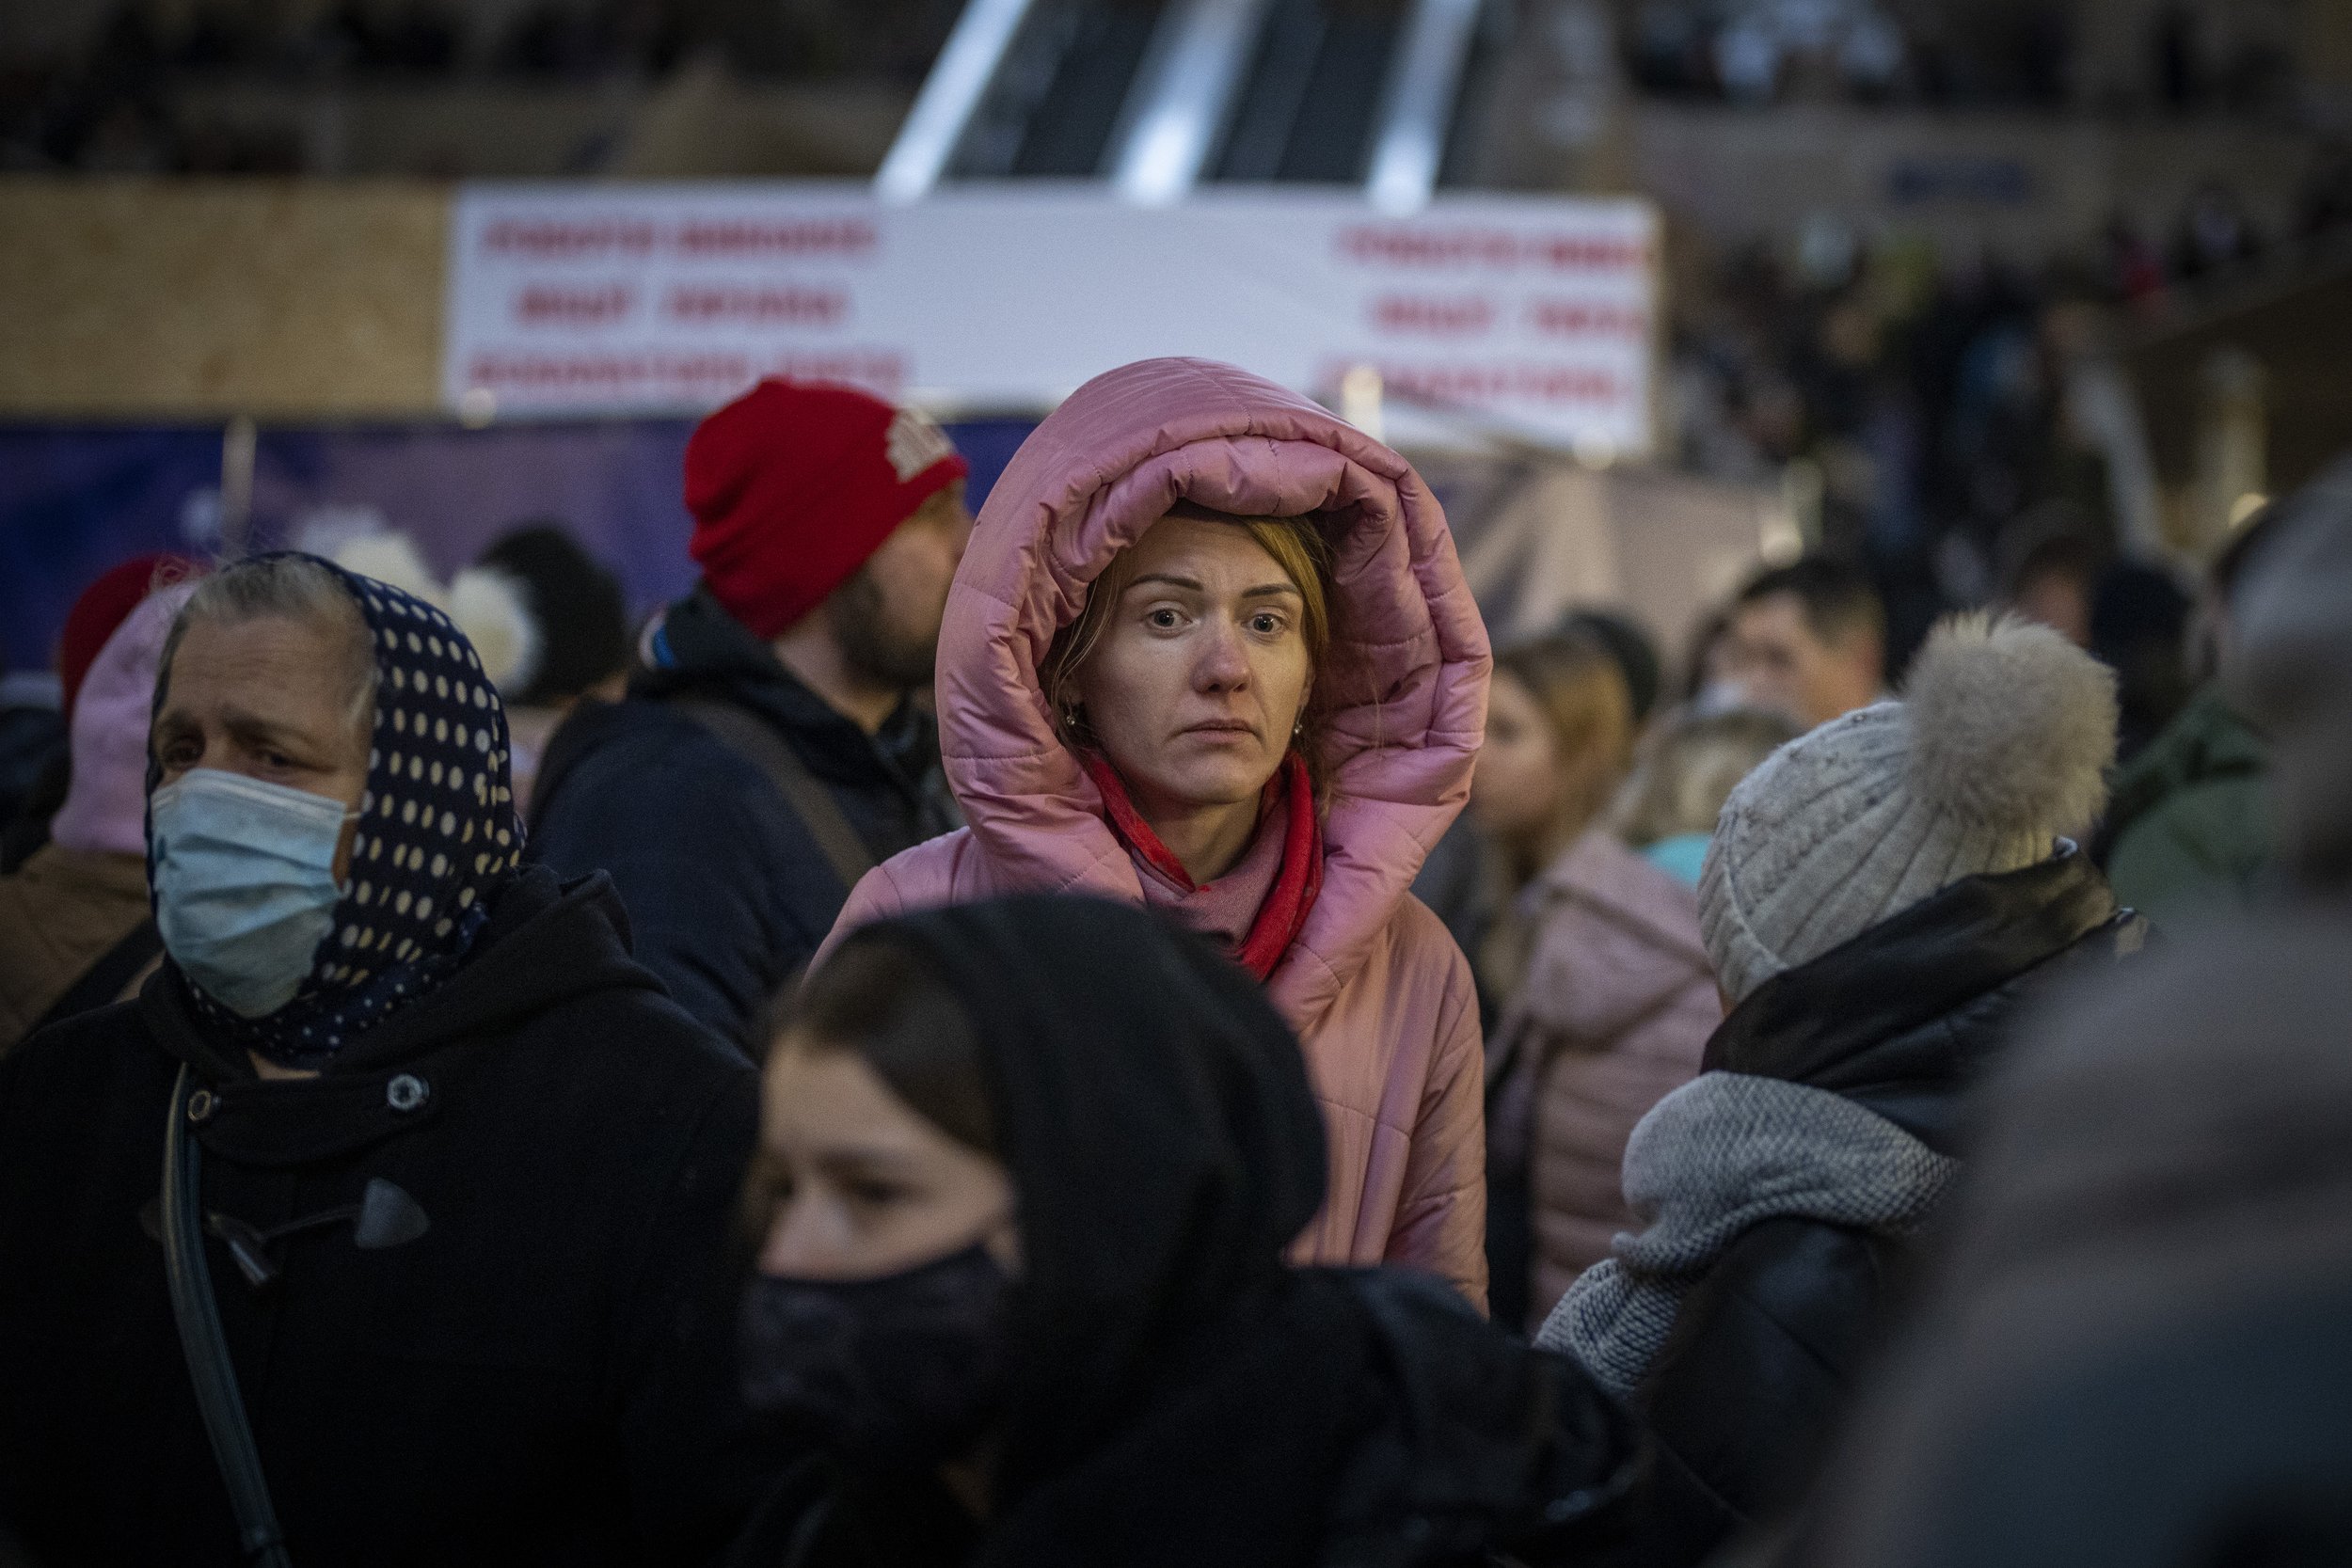  People crowd on a platform as they wait to board a Lviv-bound train in Kyiv, Ukraine, Tuesday, March 1. 2022. (AP Photo/Emilio Morenatti) 